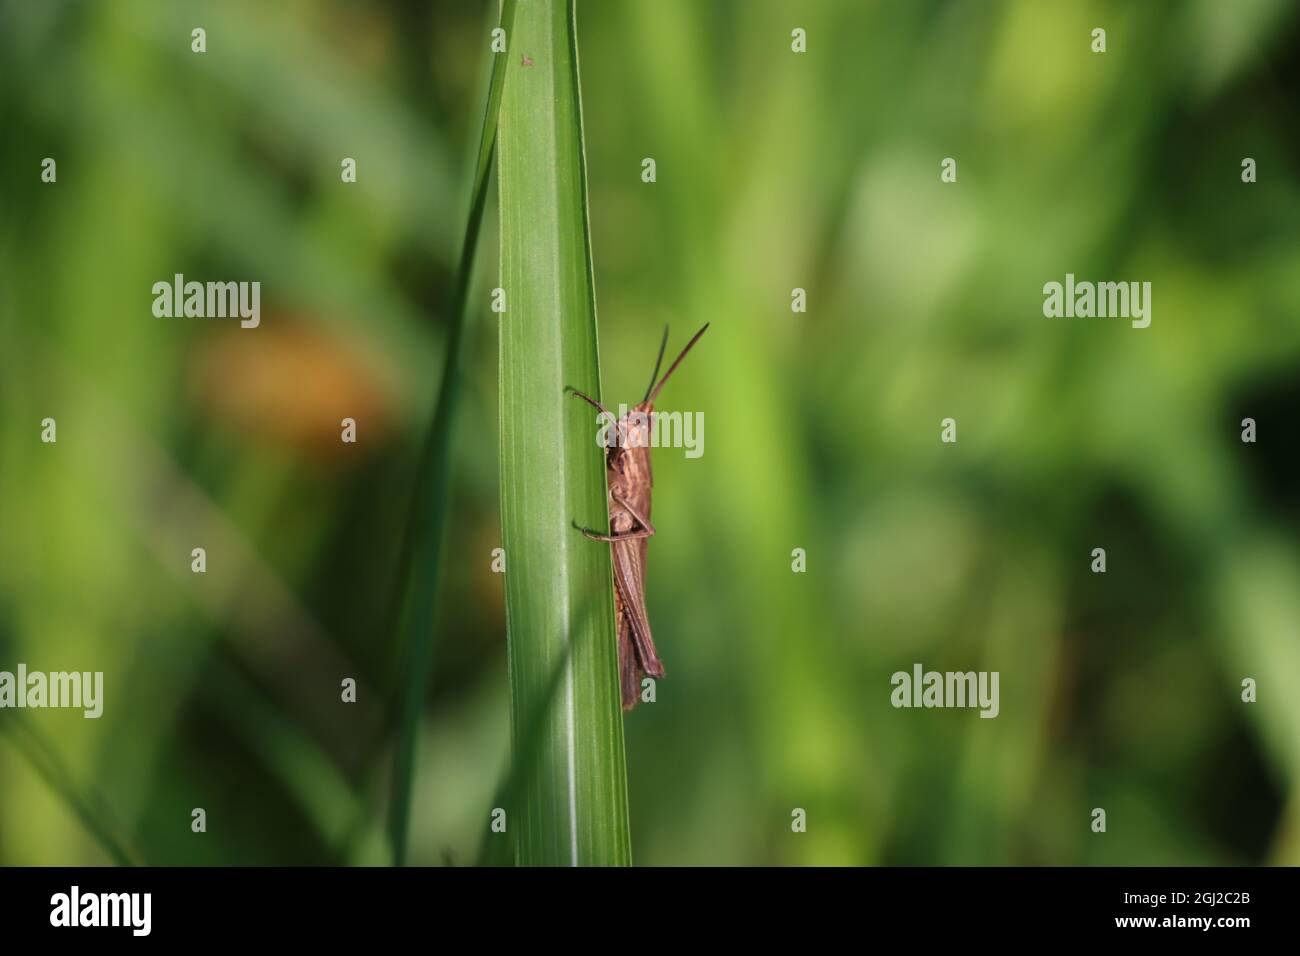 Closeup of a grasshopper on a green plant Stock Photo